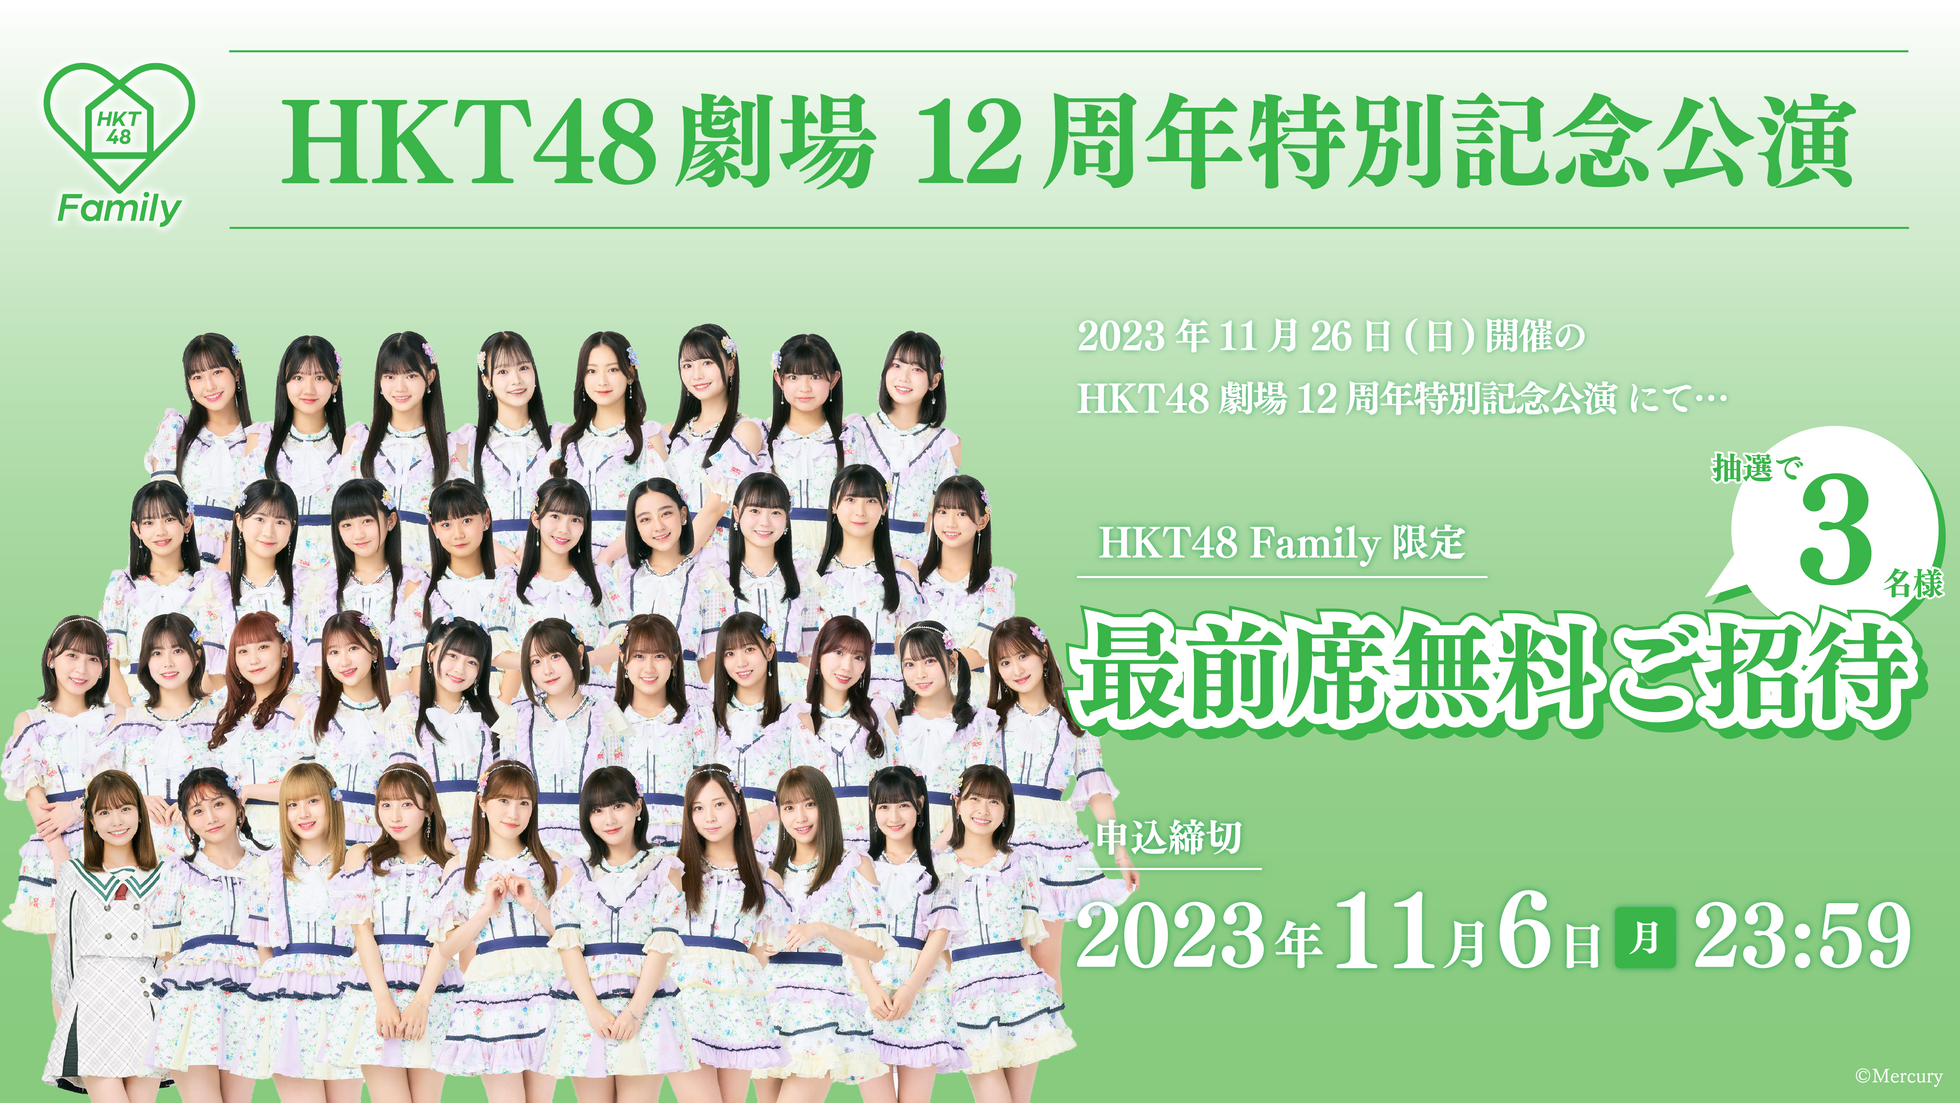 HKT48 オフィシャルメンバーシップサイト